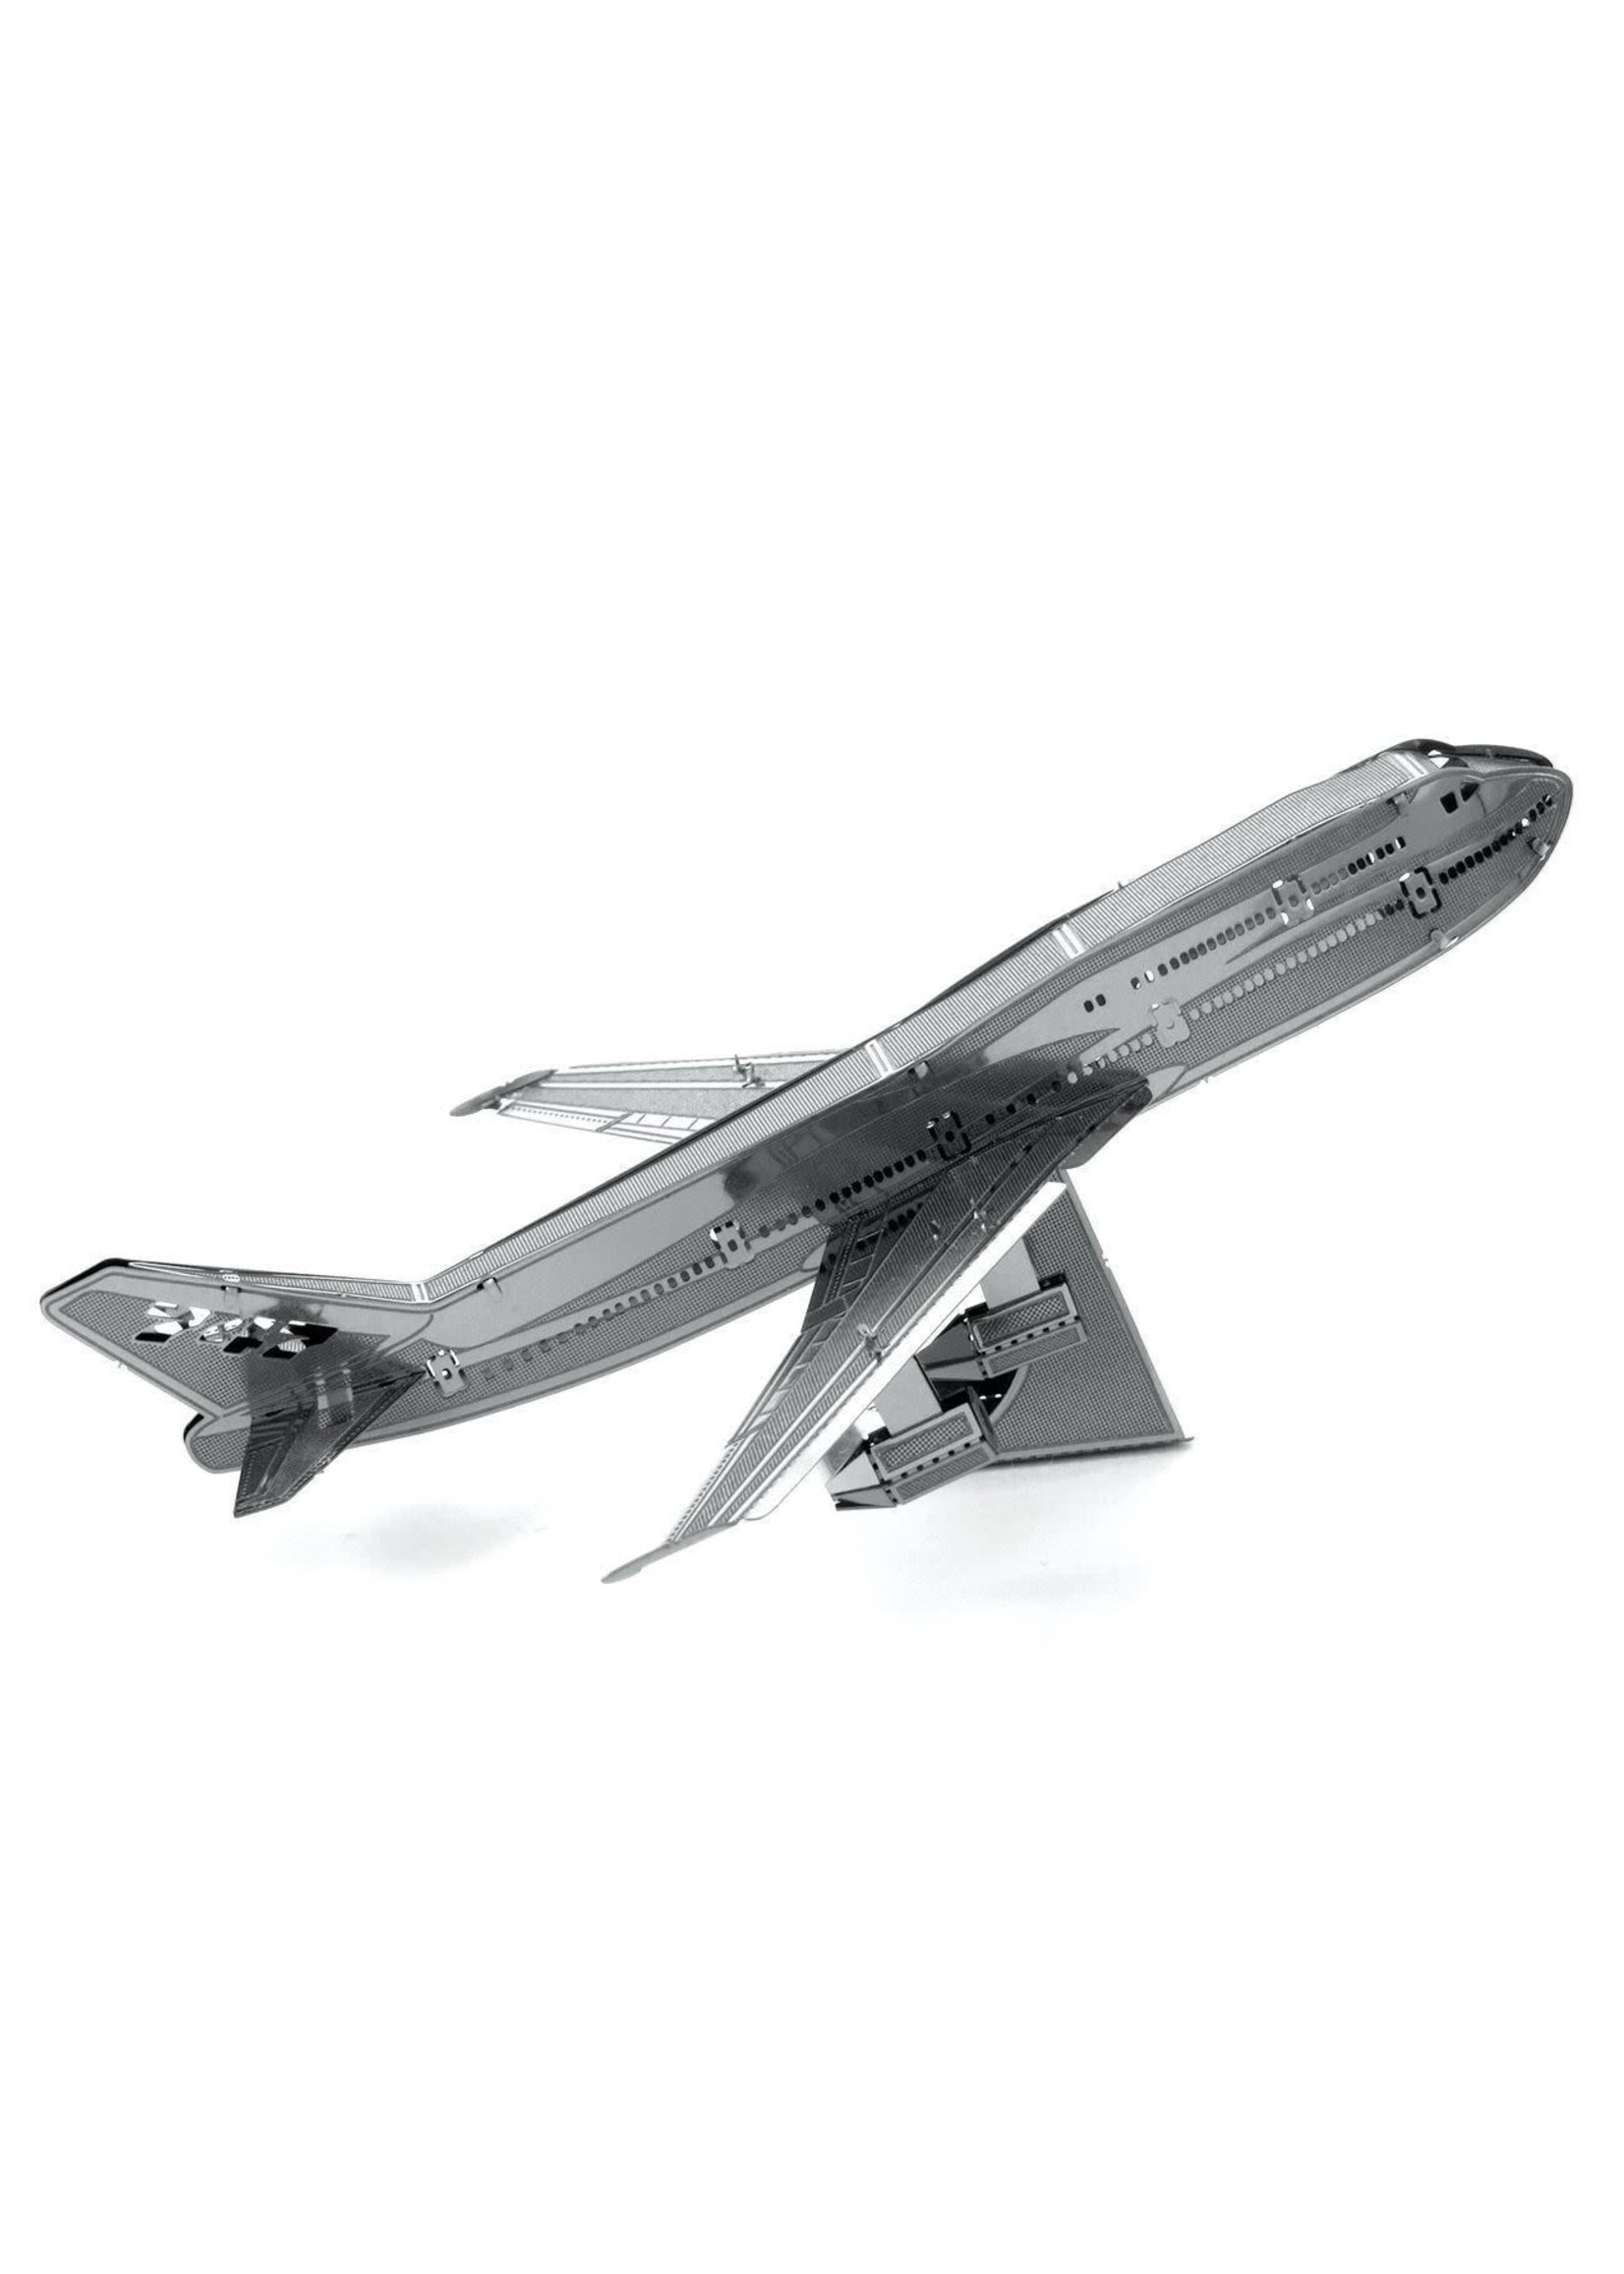 MetalWorks 747 Plane Boeing